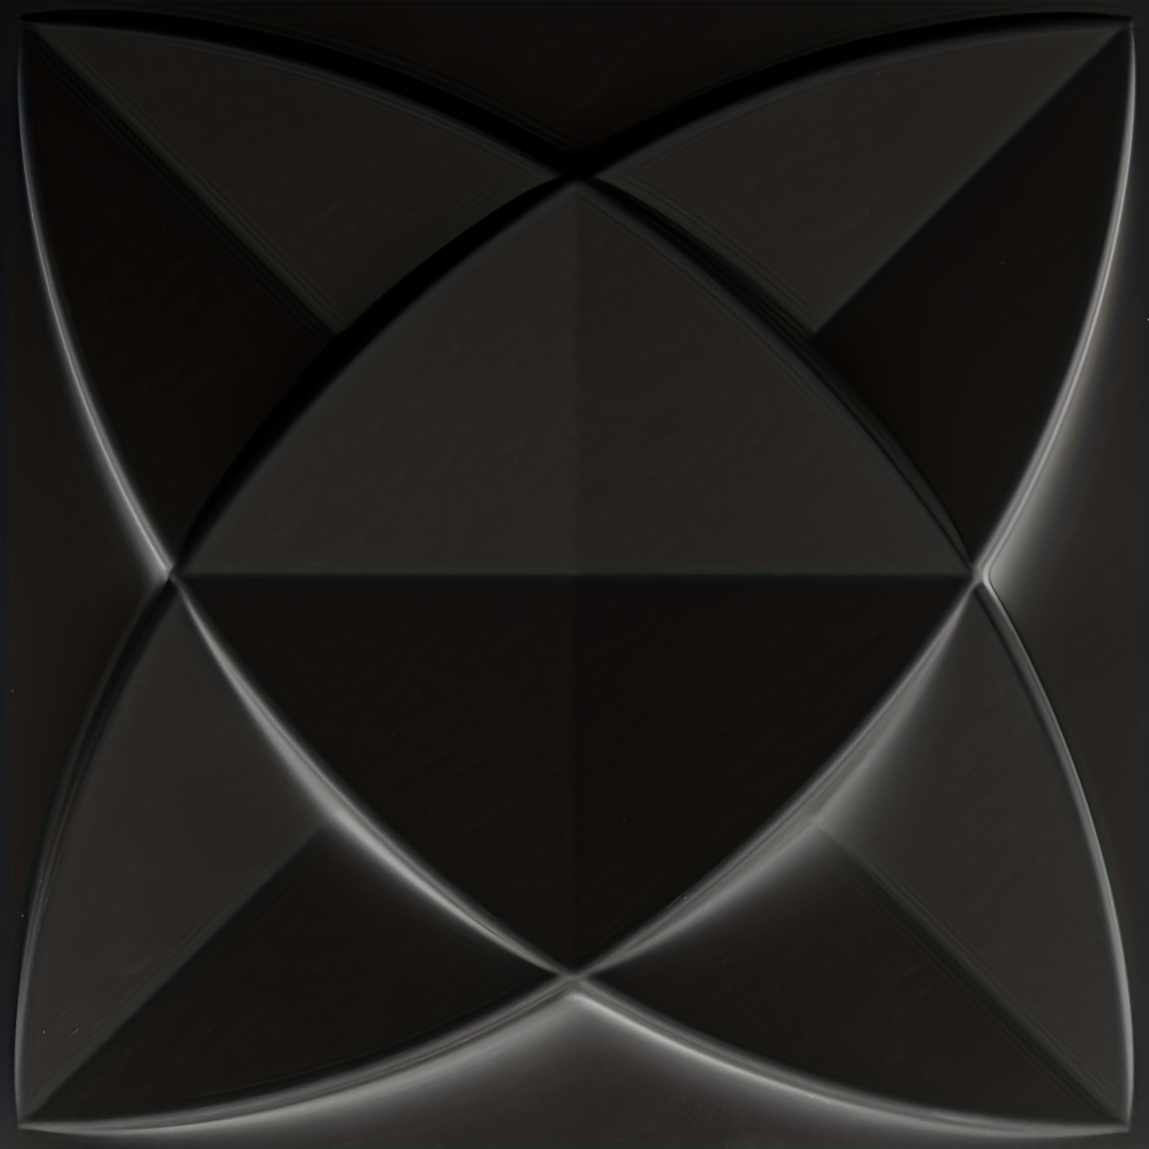 Pared Panel Decorativo 3D Estrella Blanco Caja x3m2 (12 Paneles 50x50 c/u)  WALL FORMS